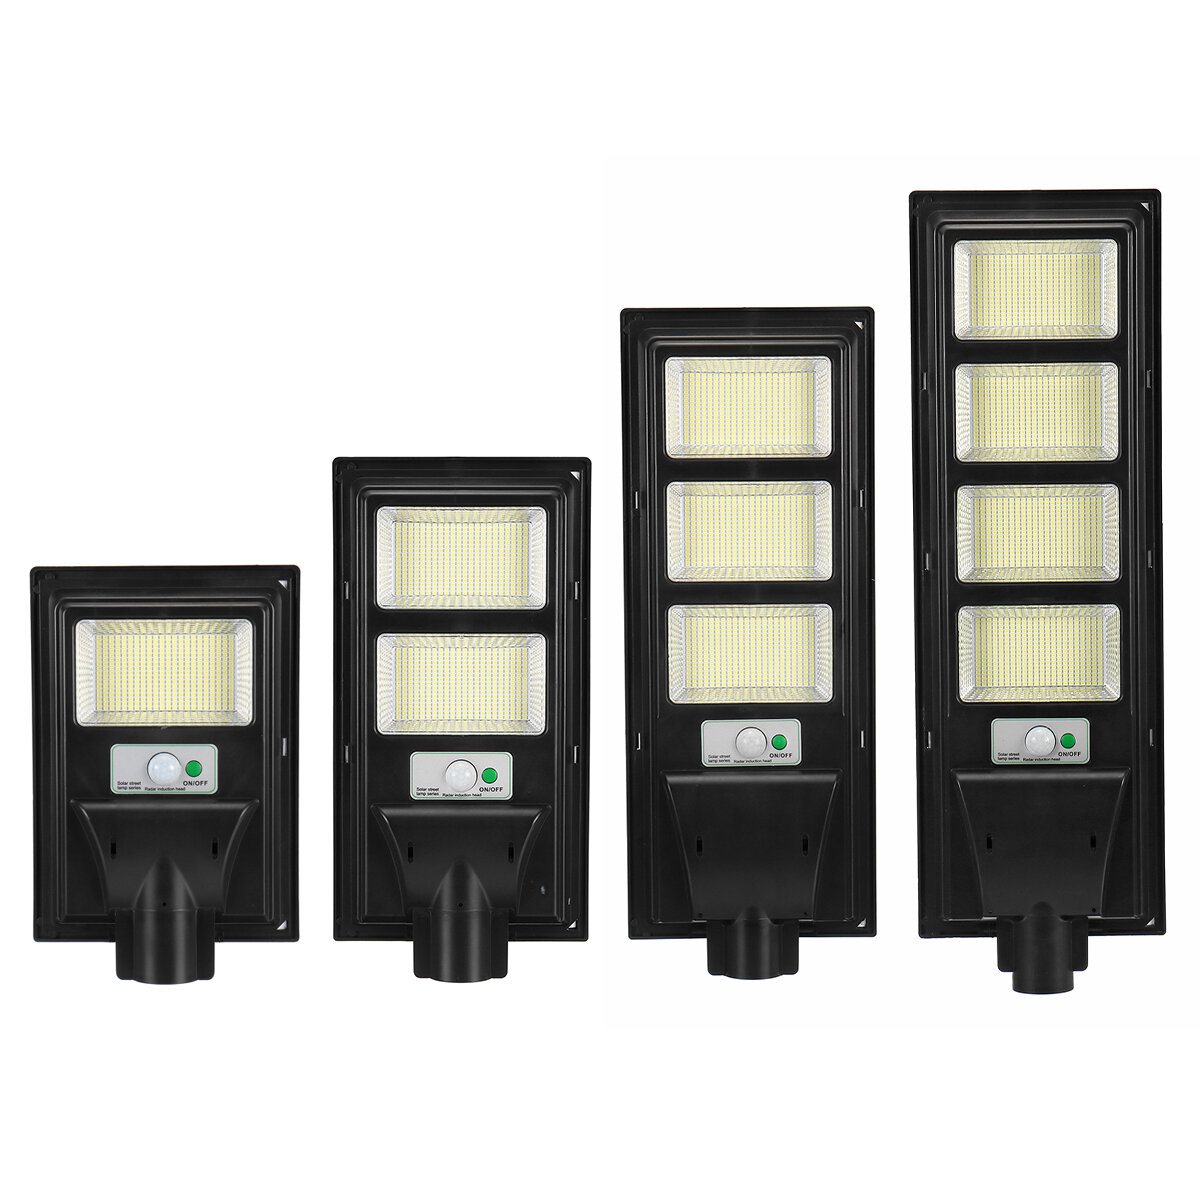 Image of 347/748/1122/1496 LED Solar Street Light PIR Motion Sensor Outdoor Wall Lamp W/ Remote